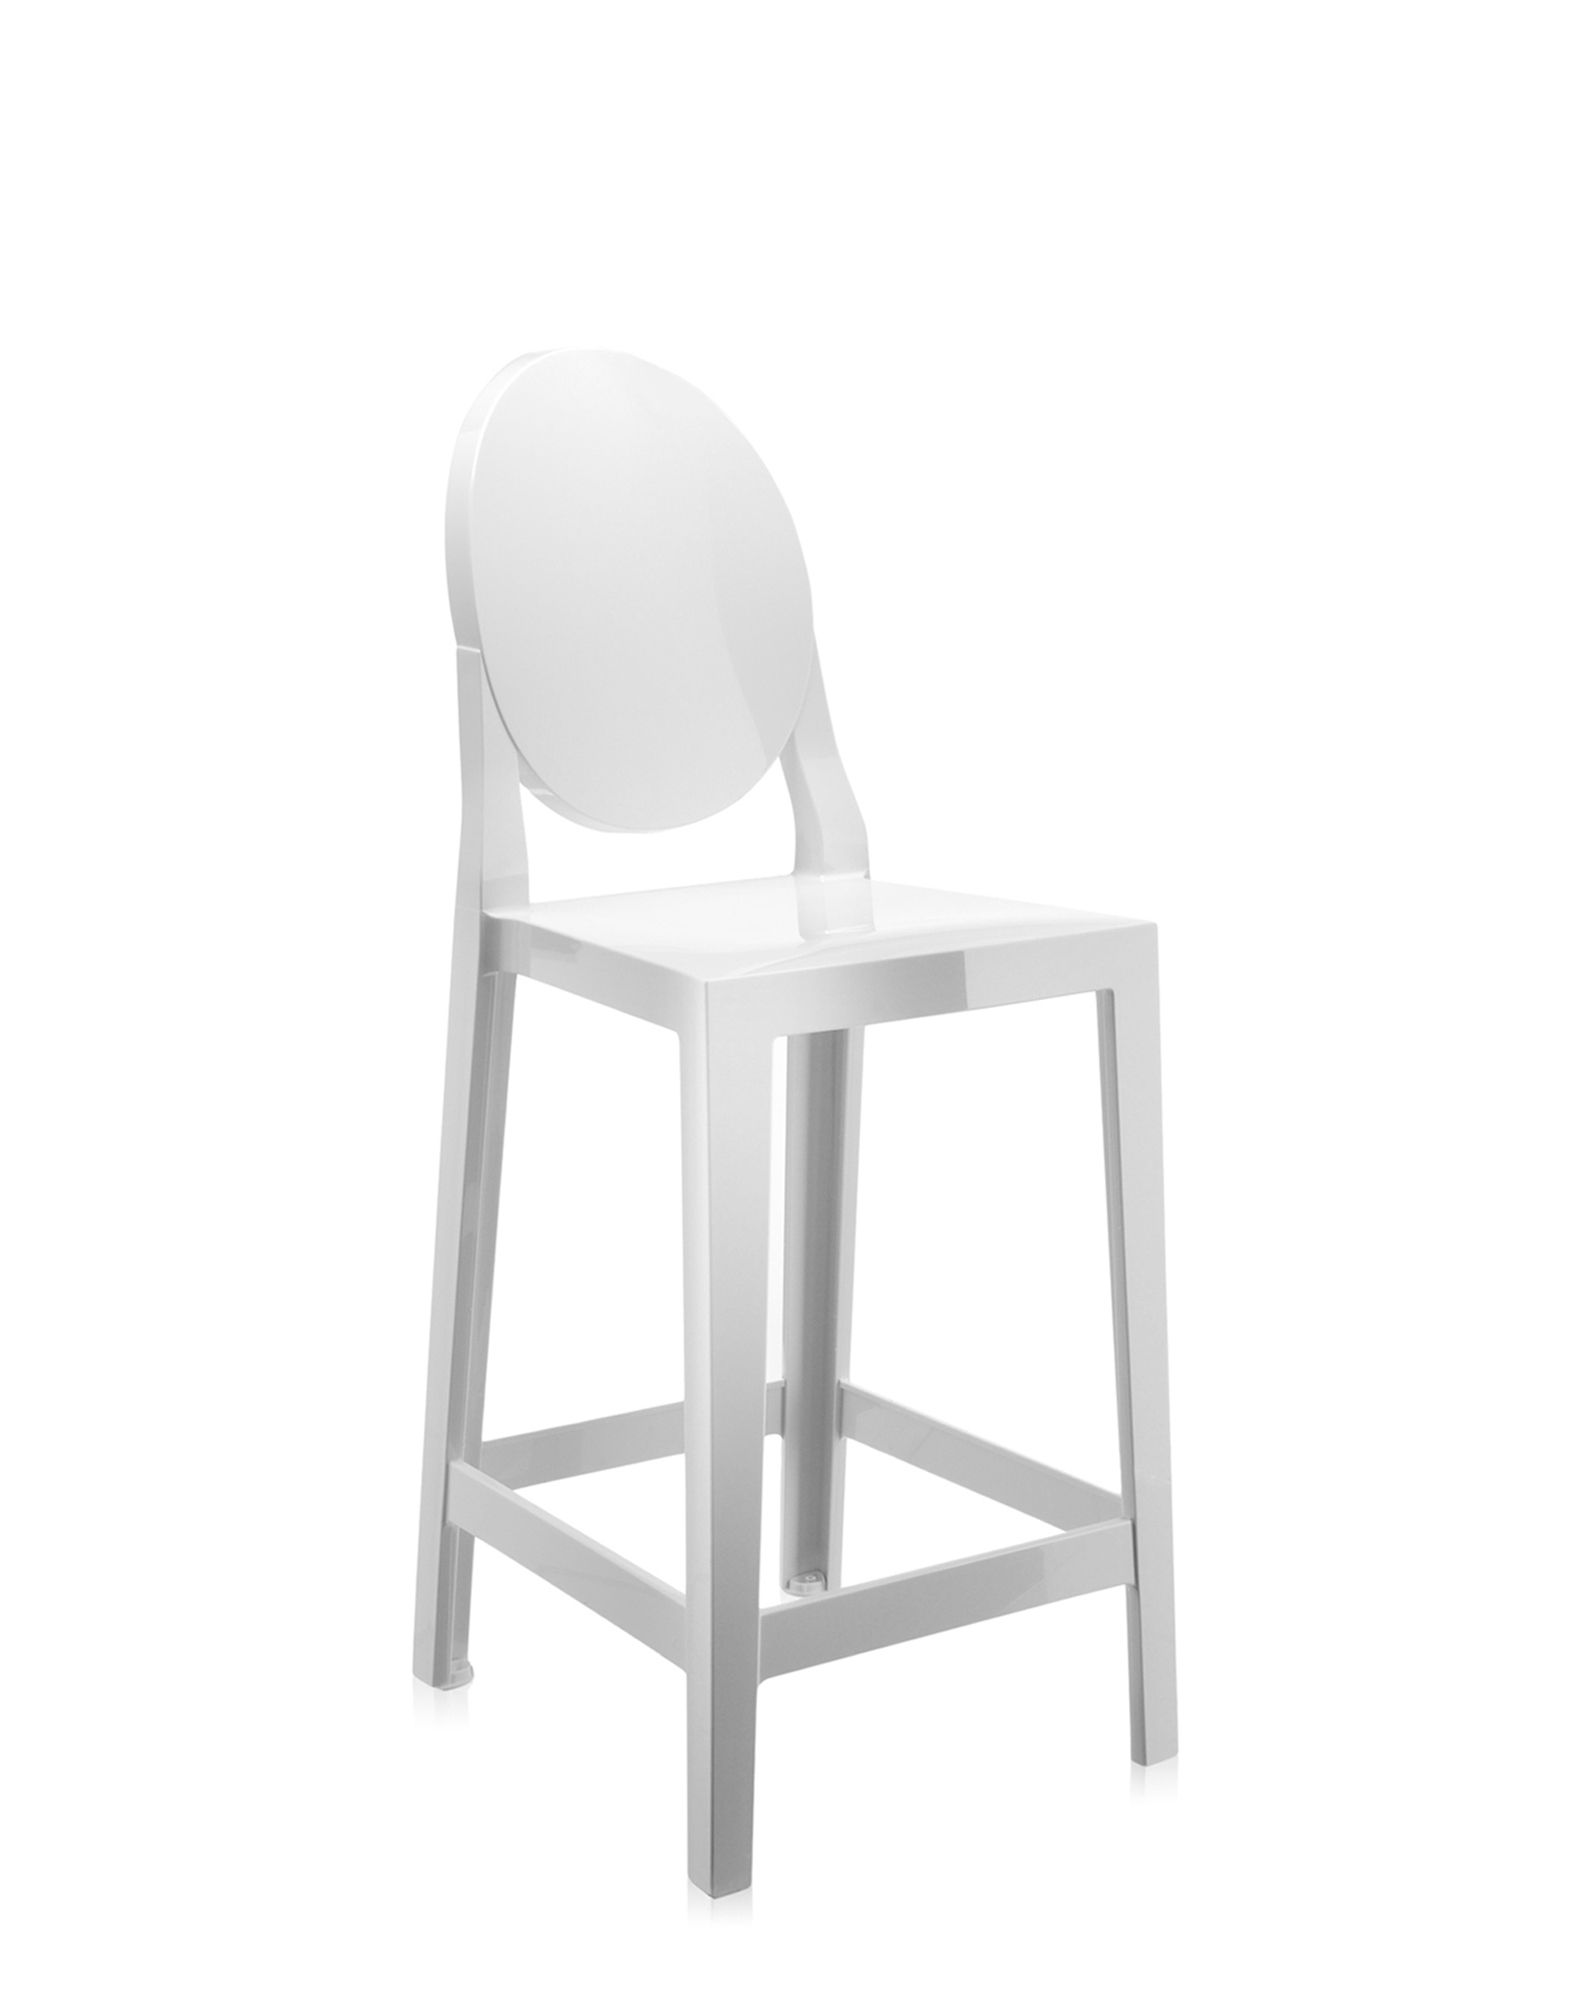 Kartell - Barová židle One More nízká, bílá